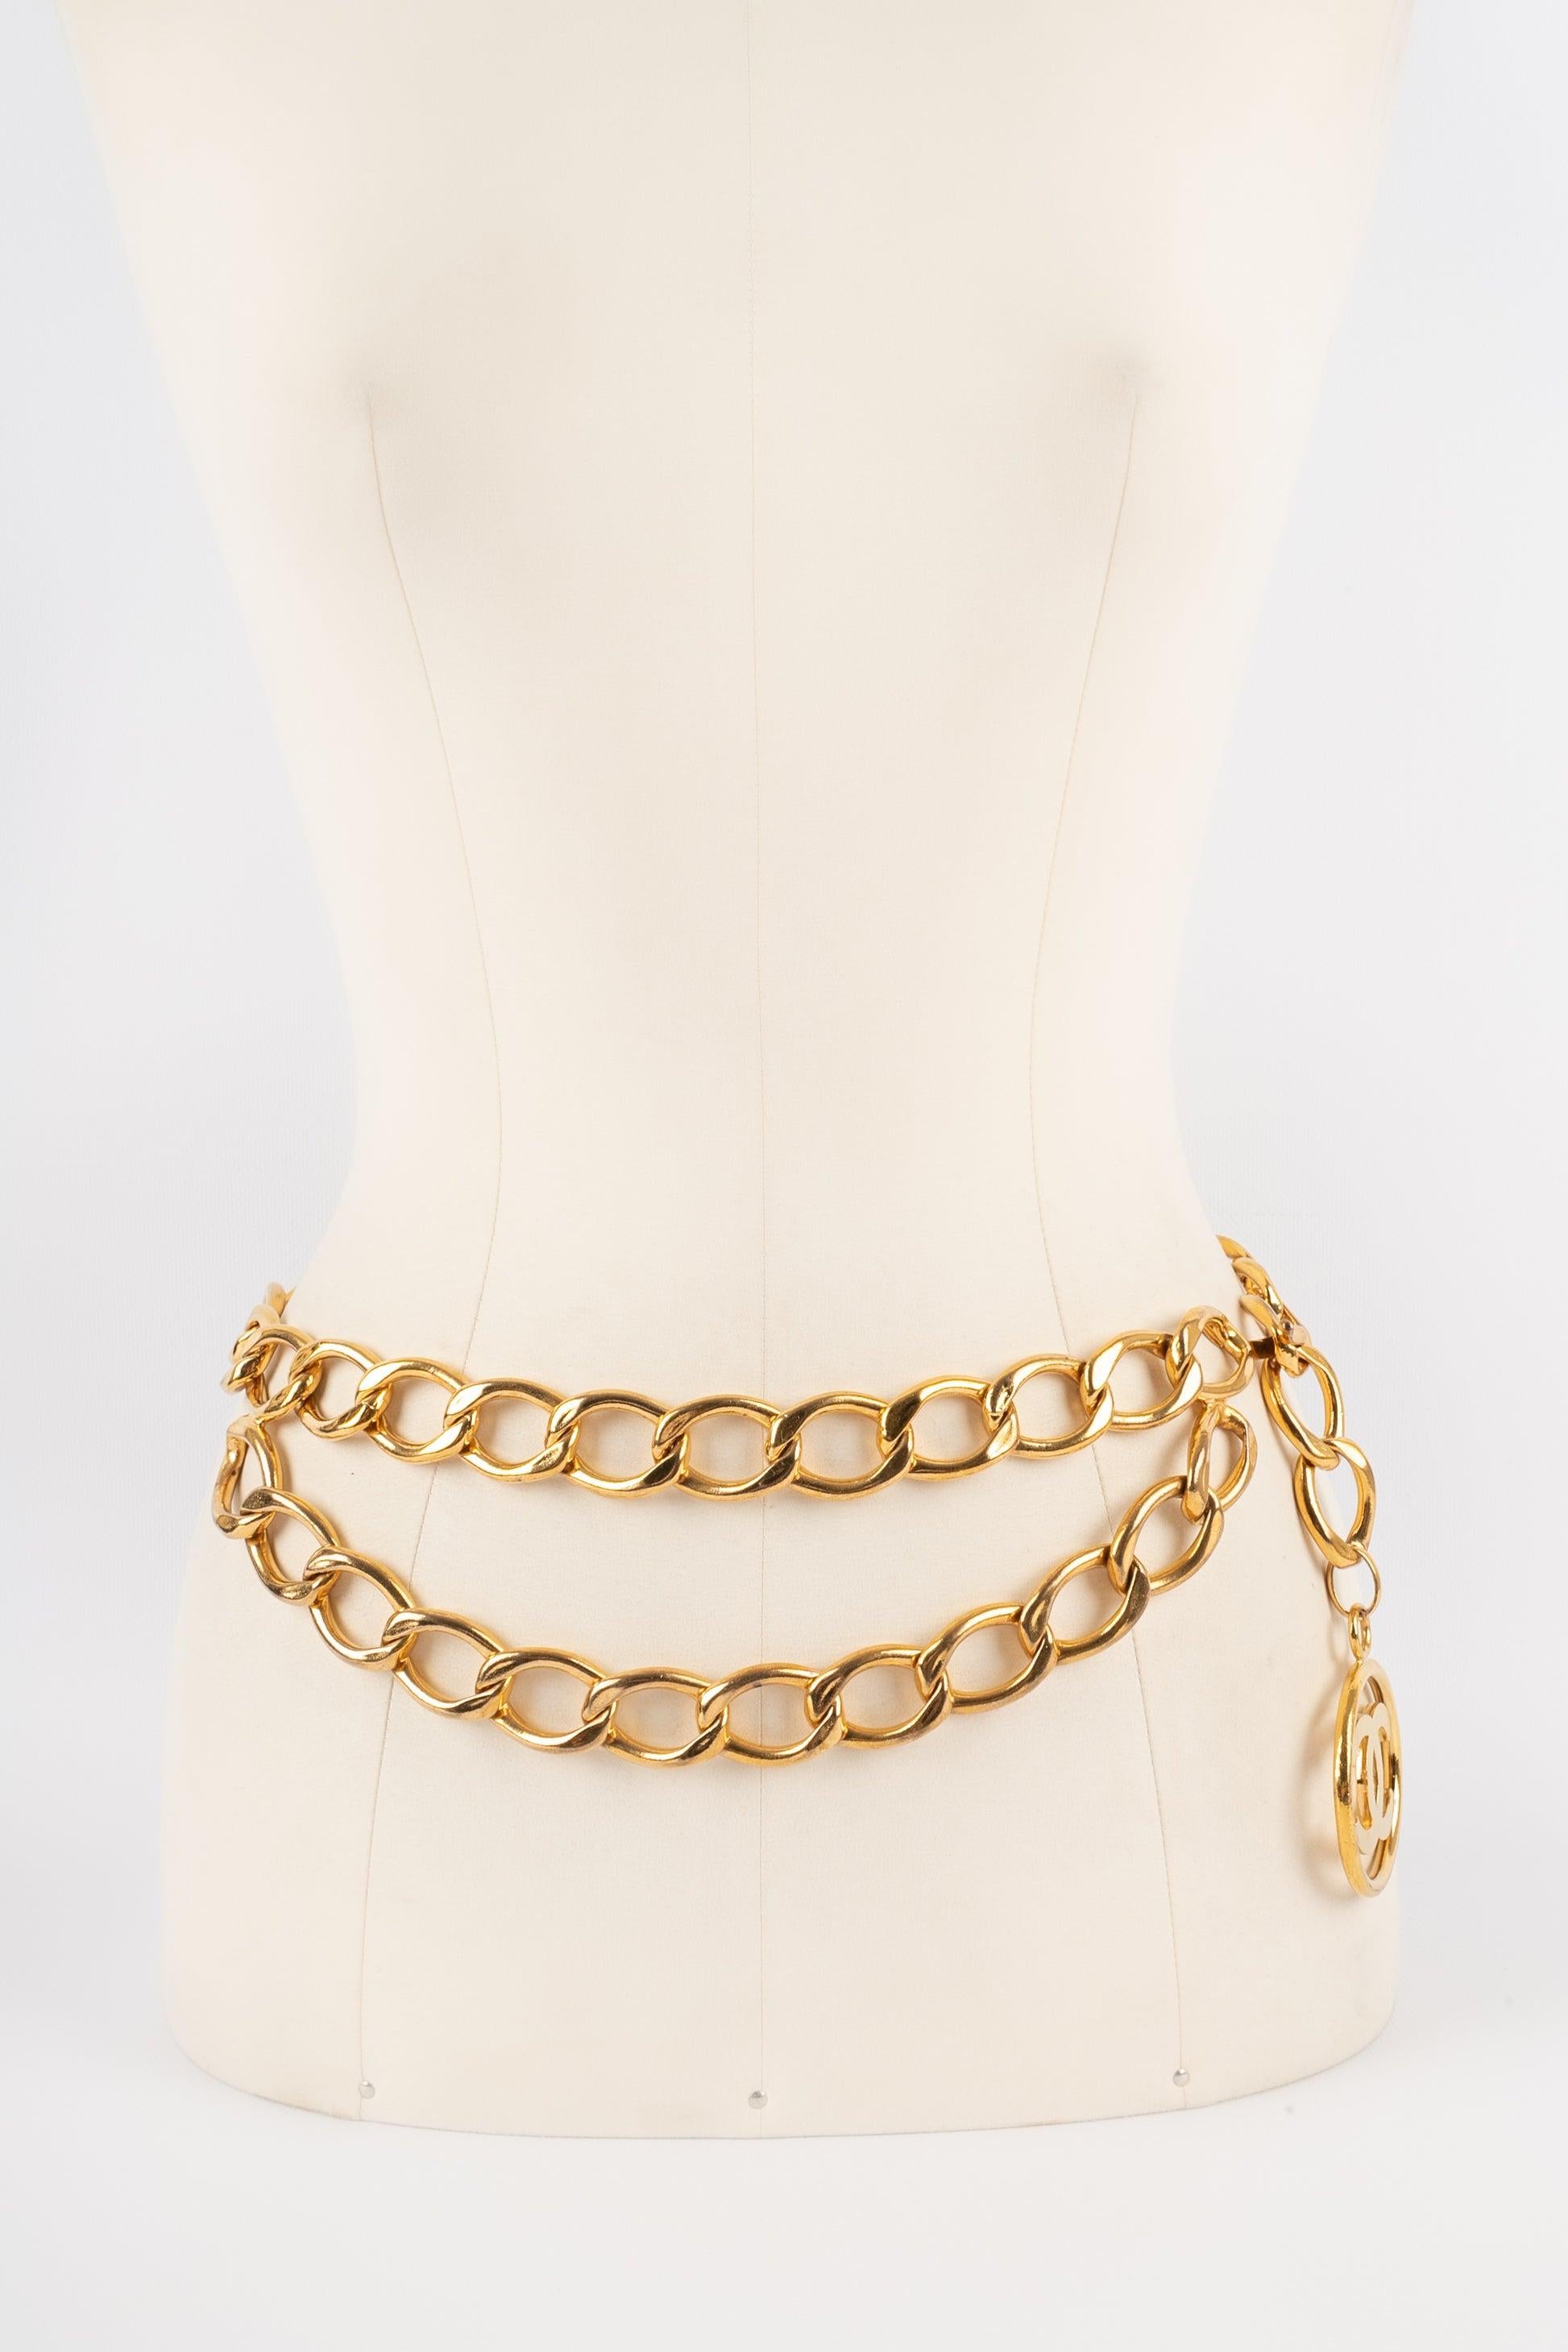 Women's Chanel Golden Metal Belt, 2009 For Sale